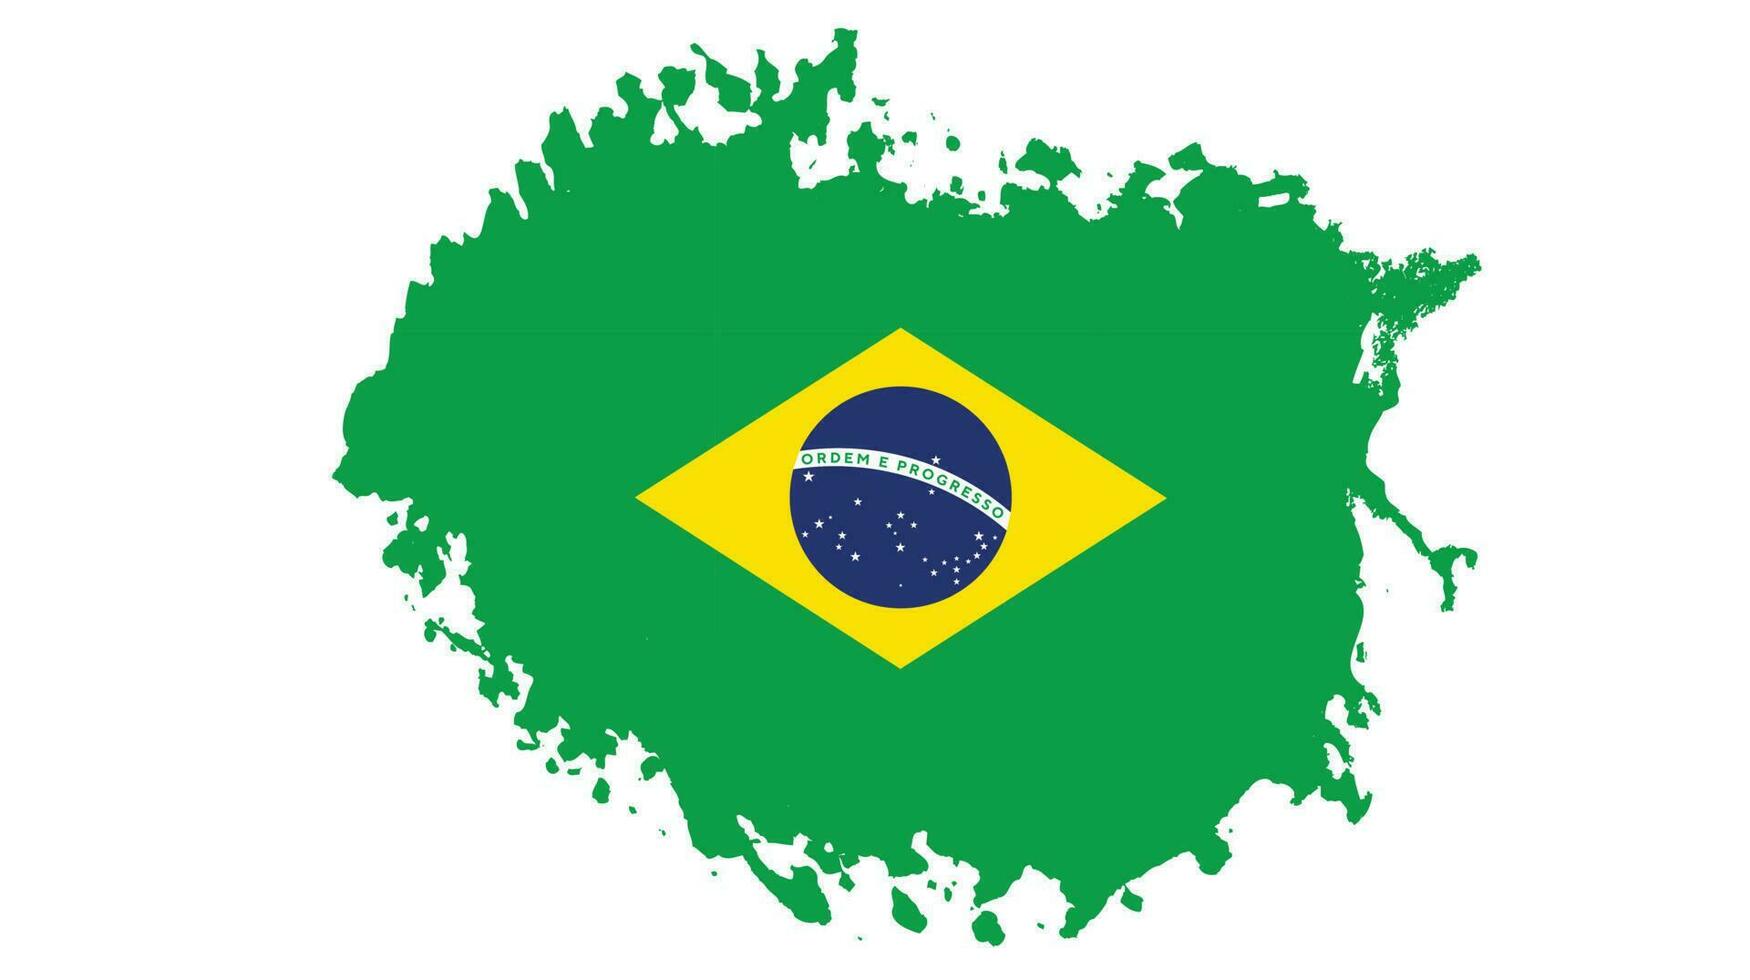 Creative Brazil grunge texture flag vector